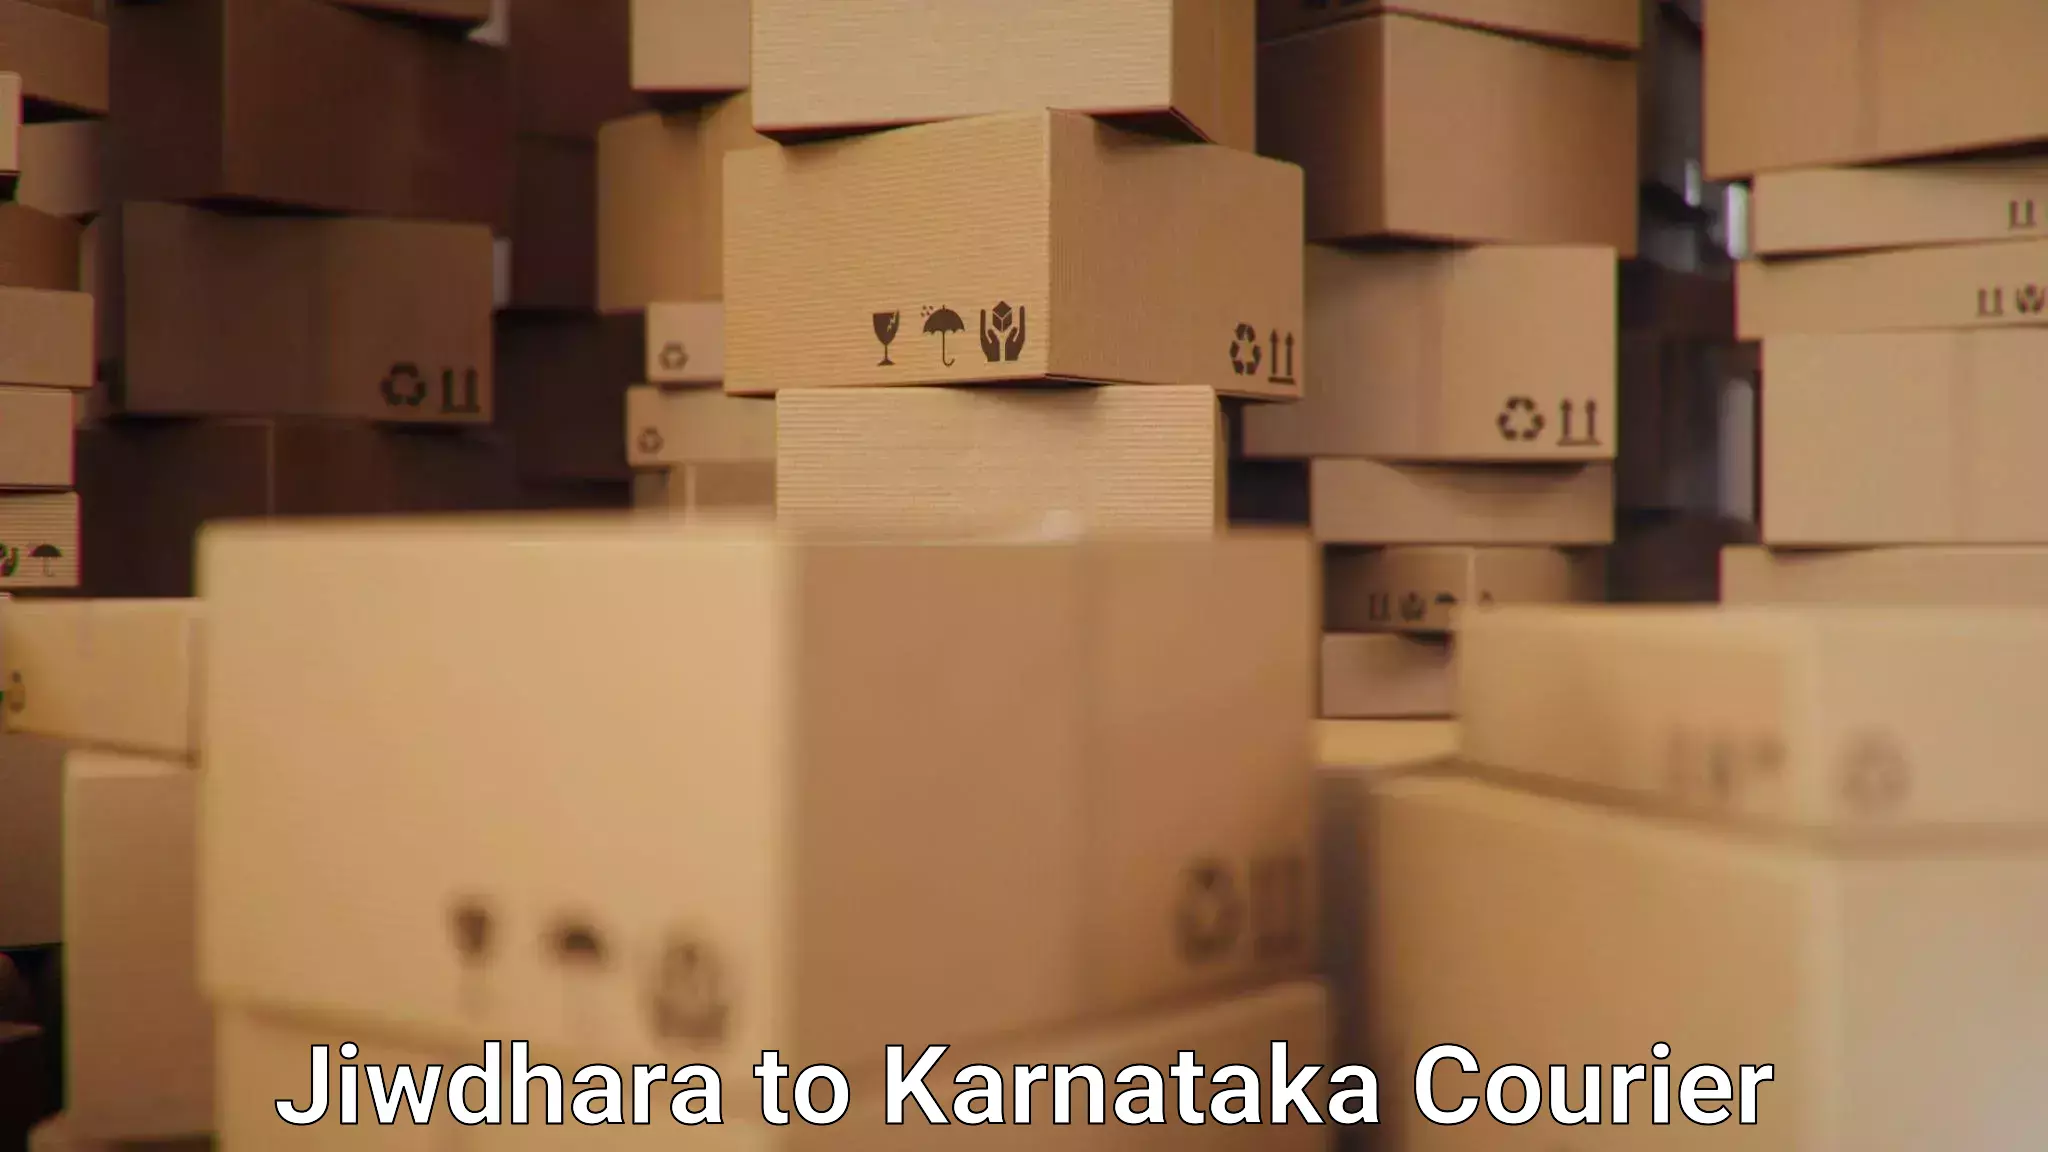 Reliable courier service Jiwdhara to Karnataka